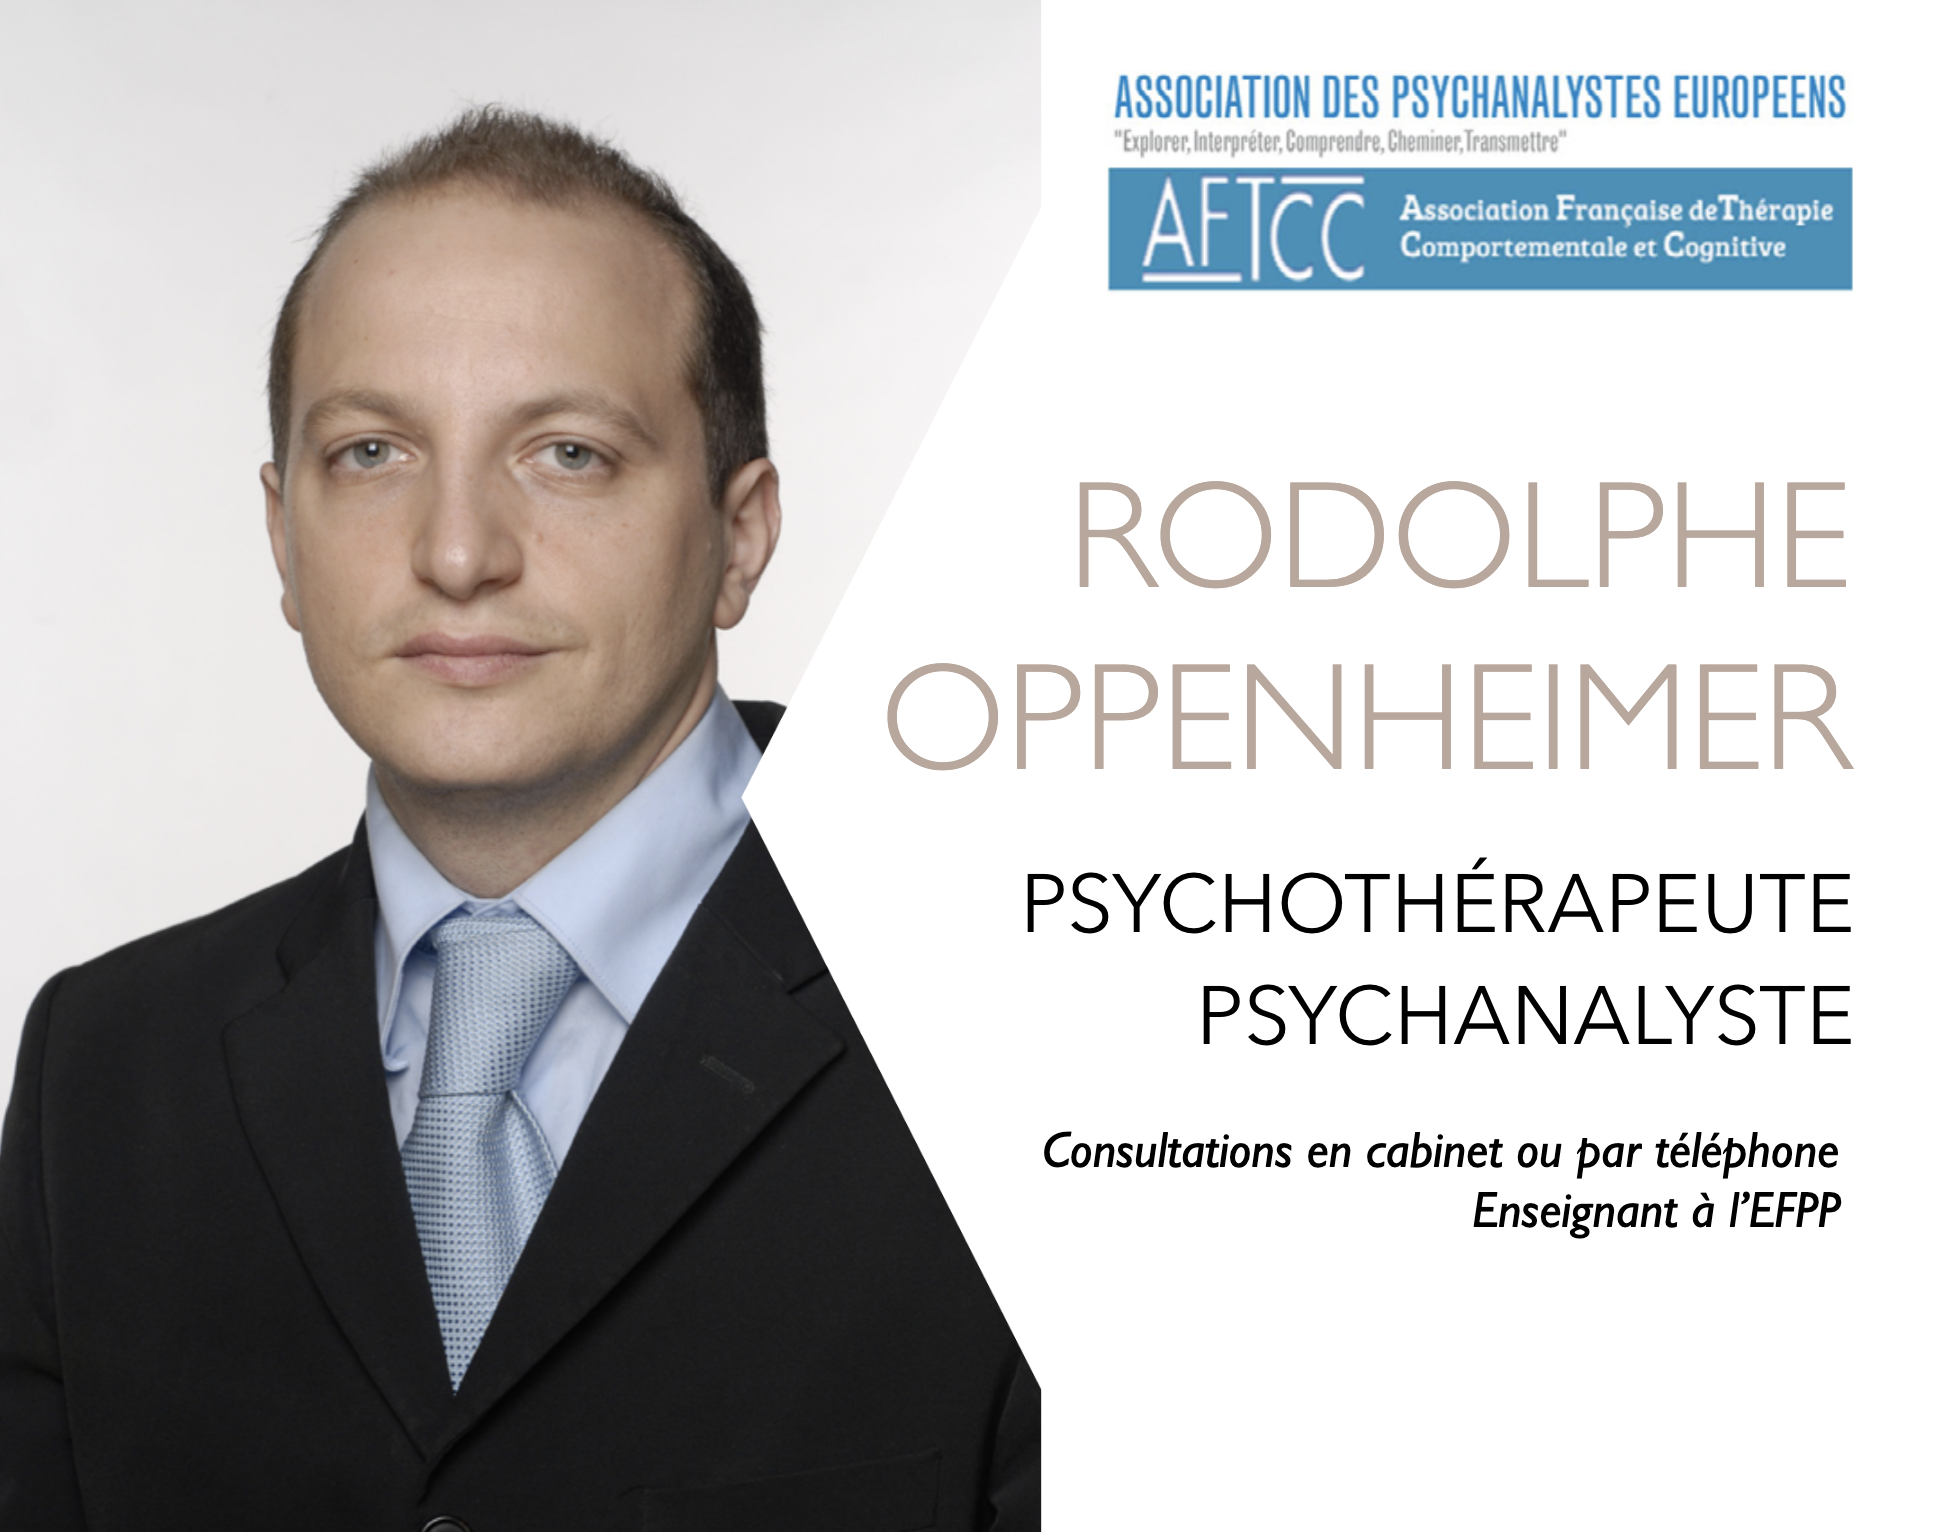 rodolphe oppenheimer psychotherapeute psychanalyste consultation